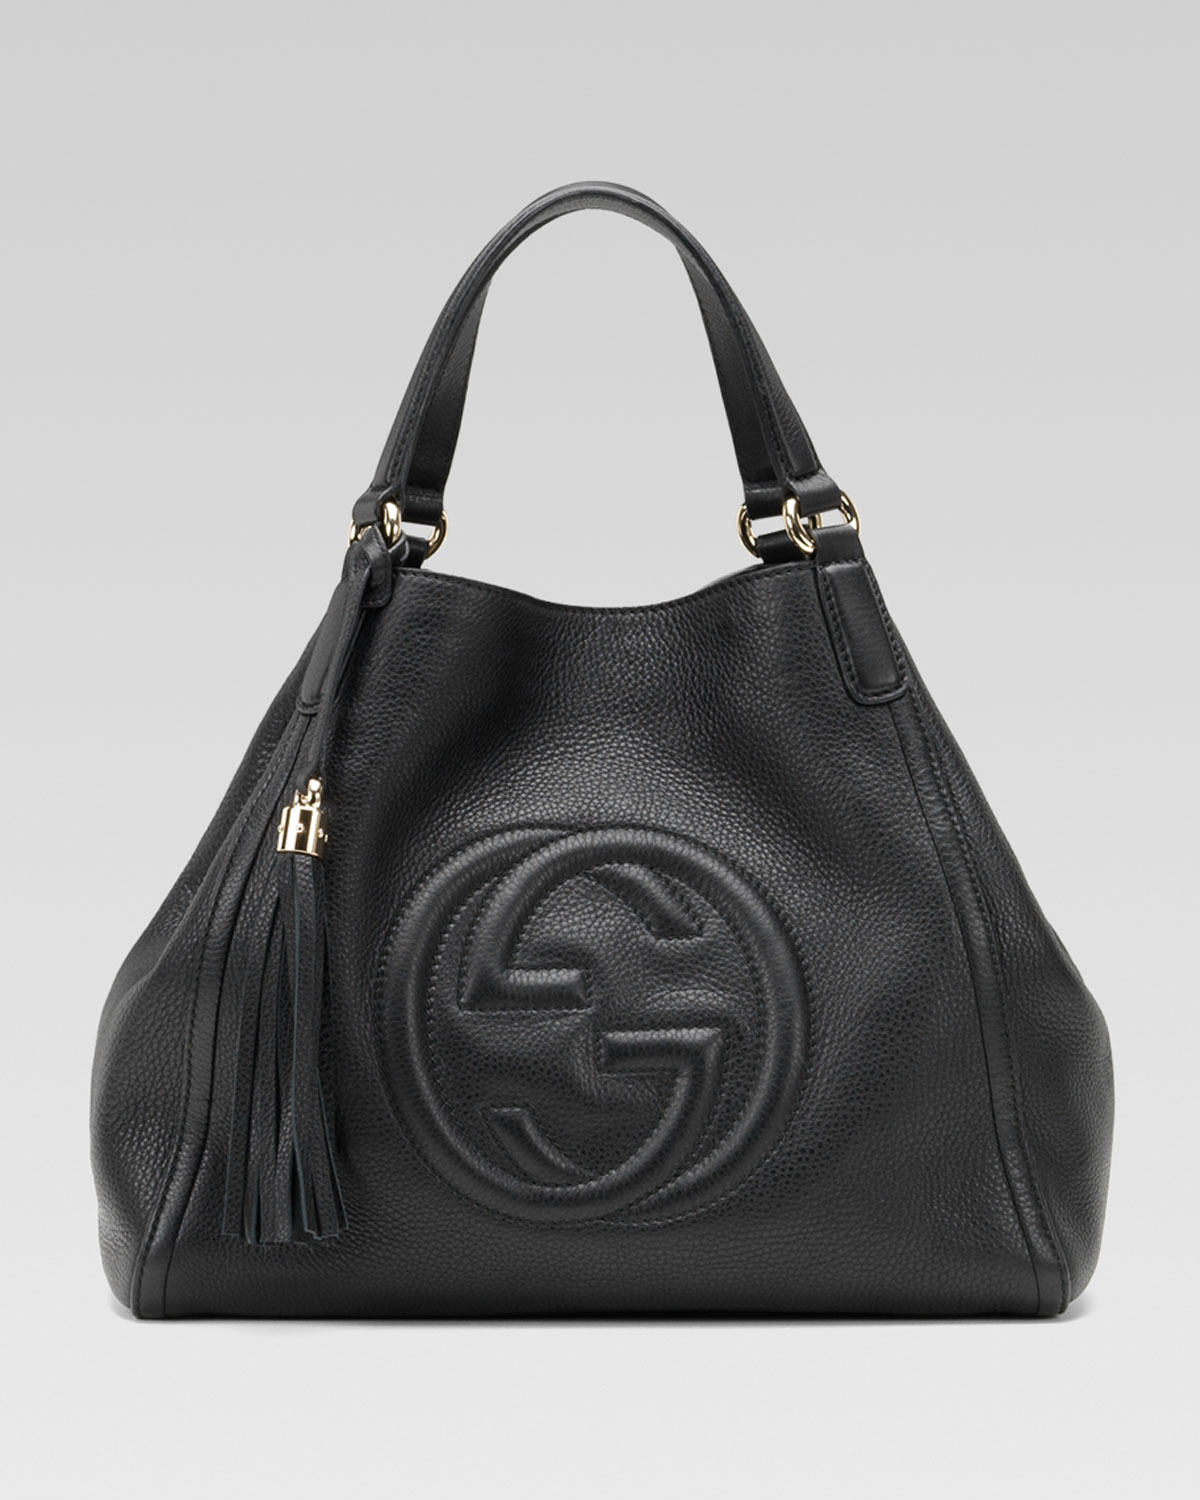 Lyst - Gucci Soho Medium Hobo Bag in Black